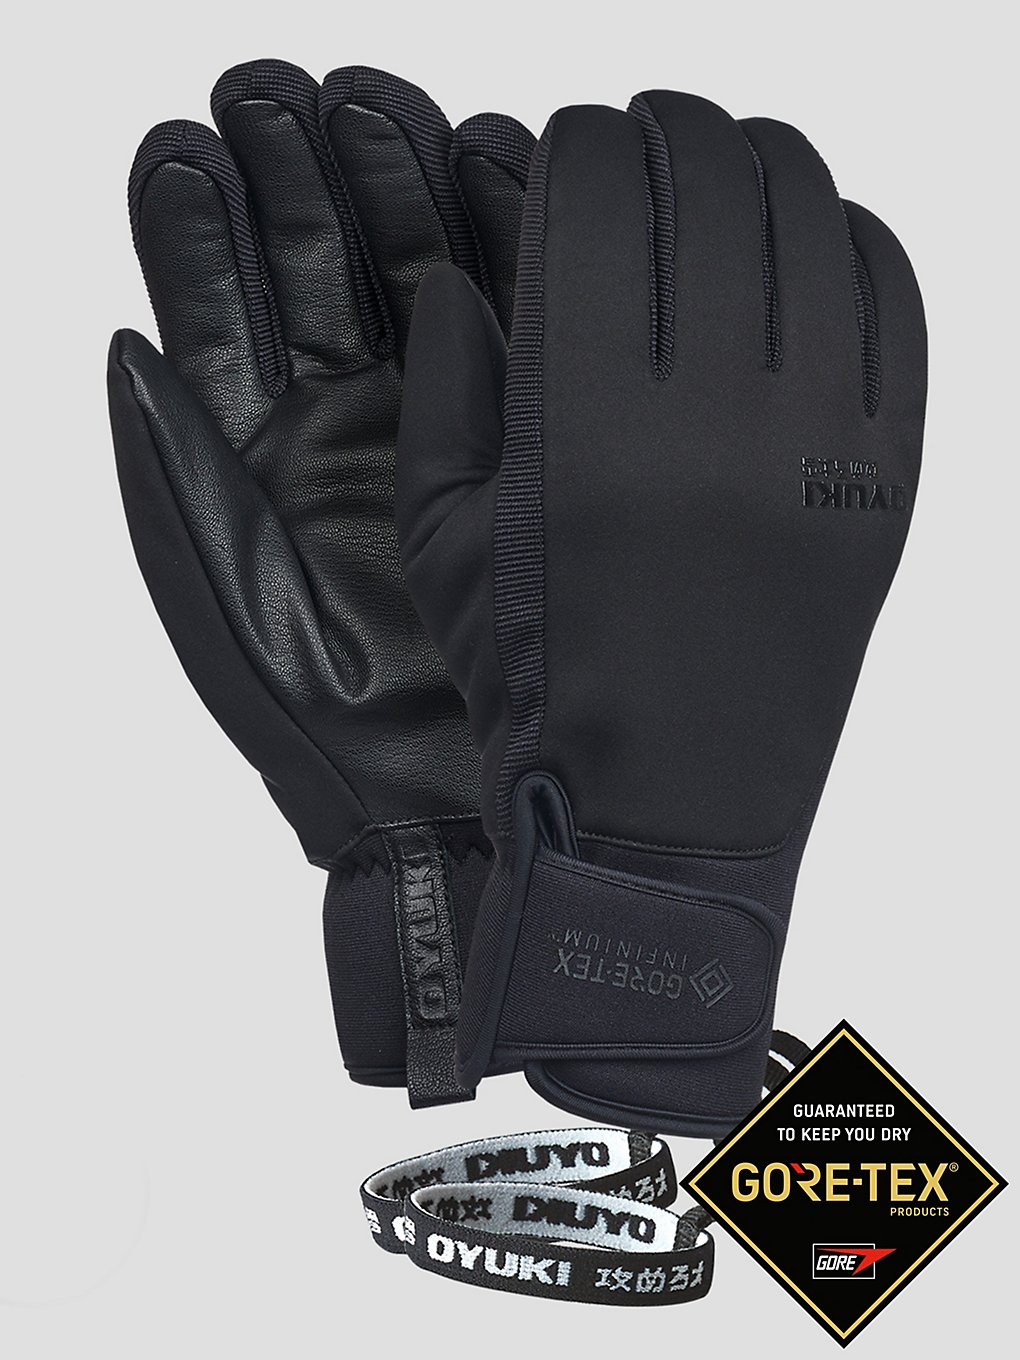 Oyuki Nikko Gore-Tex Infinium Handschuhe black kaufen